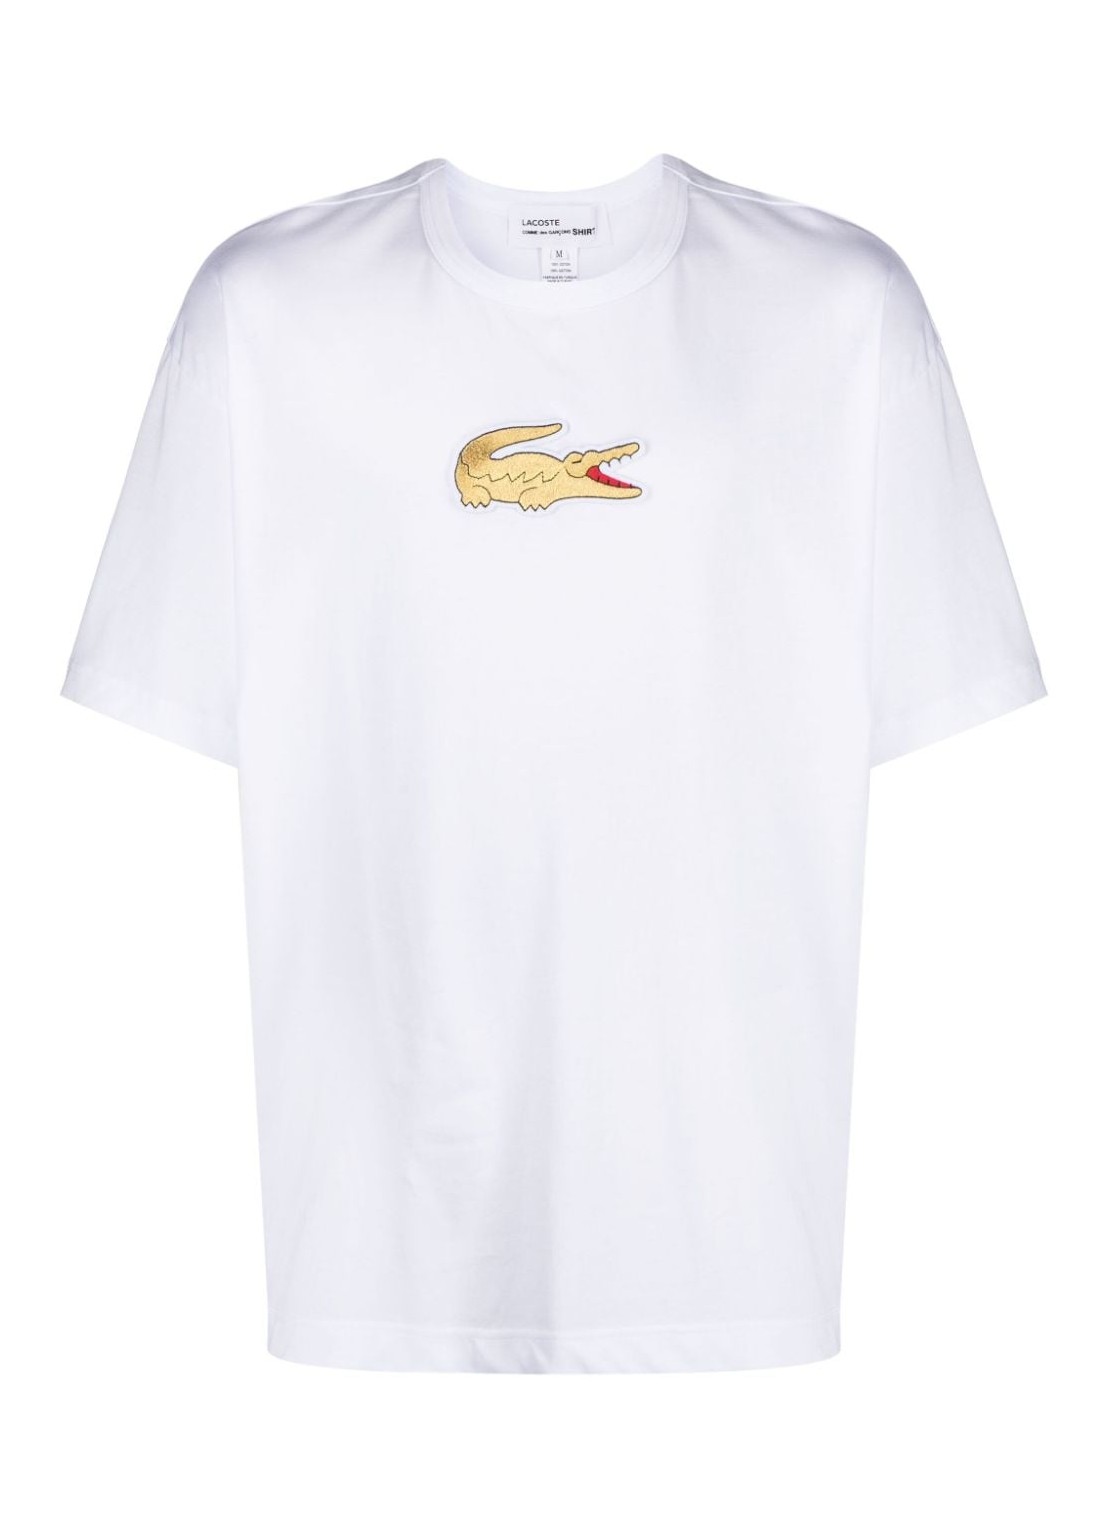 Camiseta comme des garcons t-shirt man mens t-shirt knit flt008 white talla blanco
 